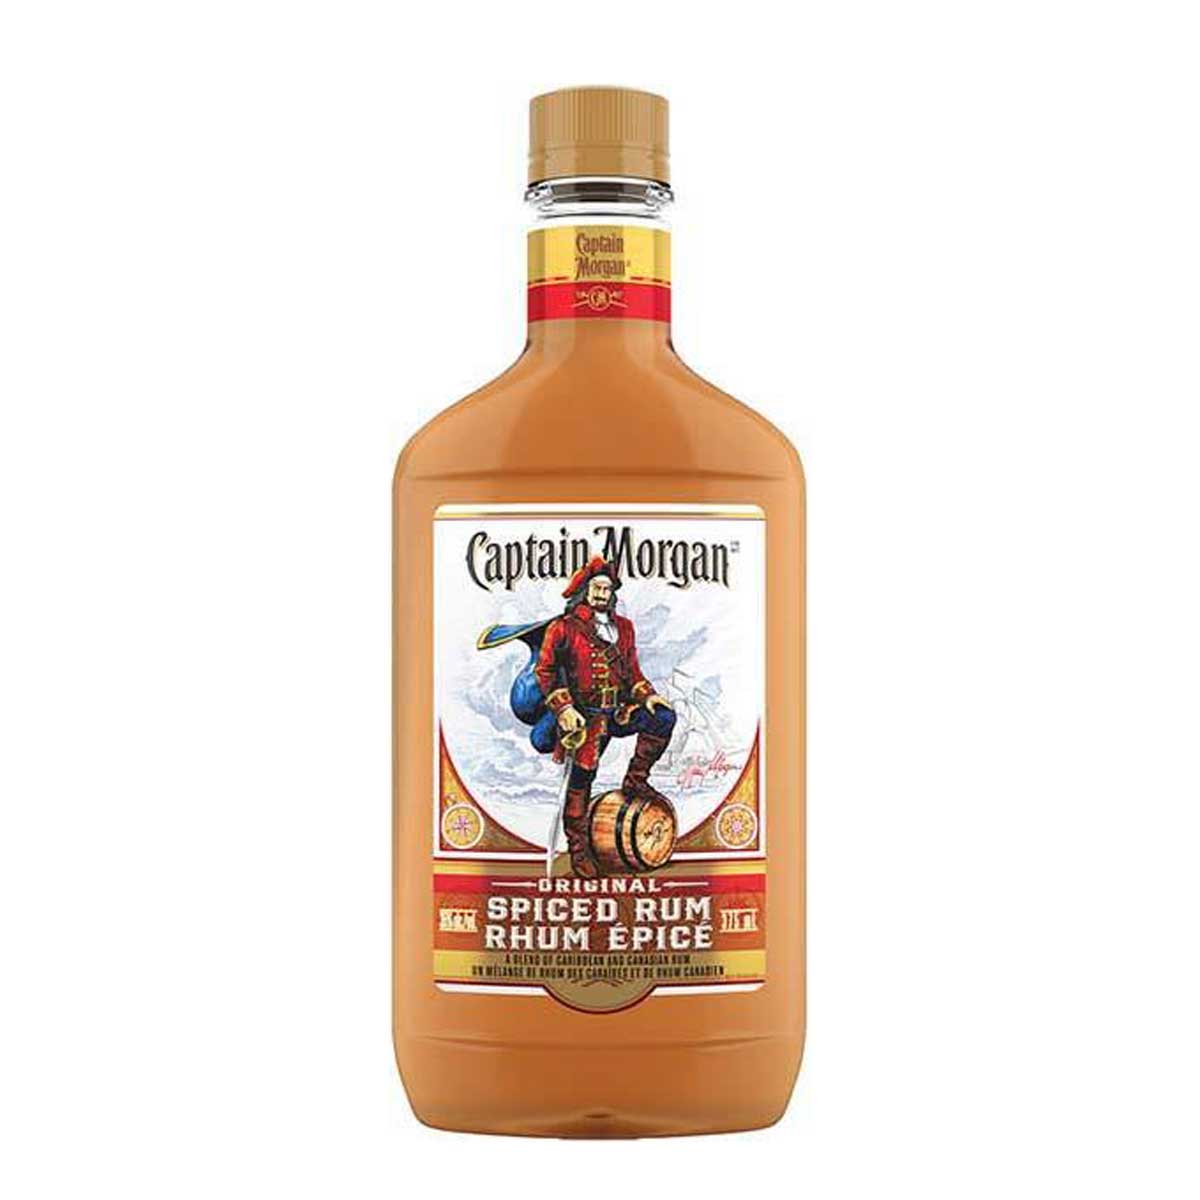 TAG Liquor Stores Delivery - Captain Morgan Original Spiced Rum 375ml